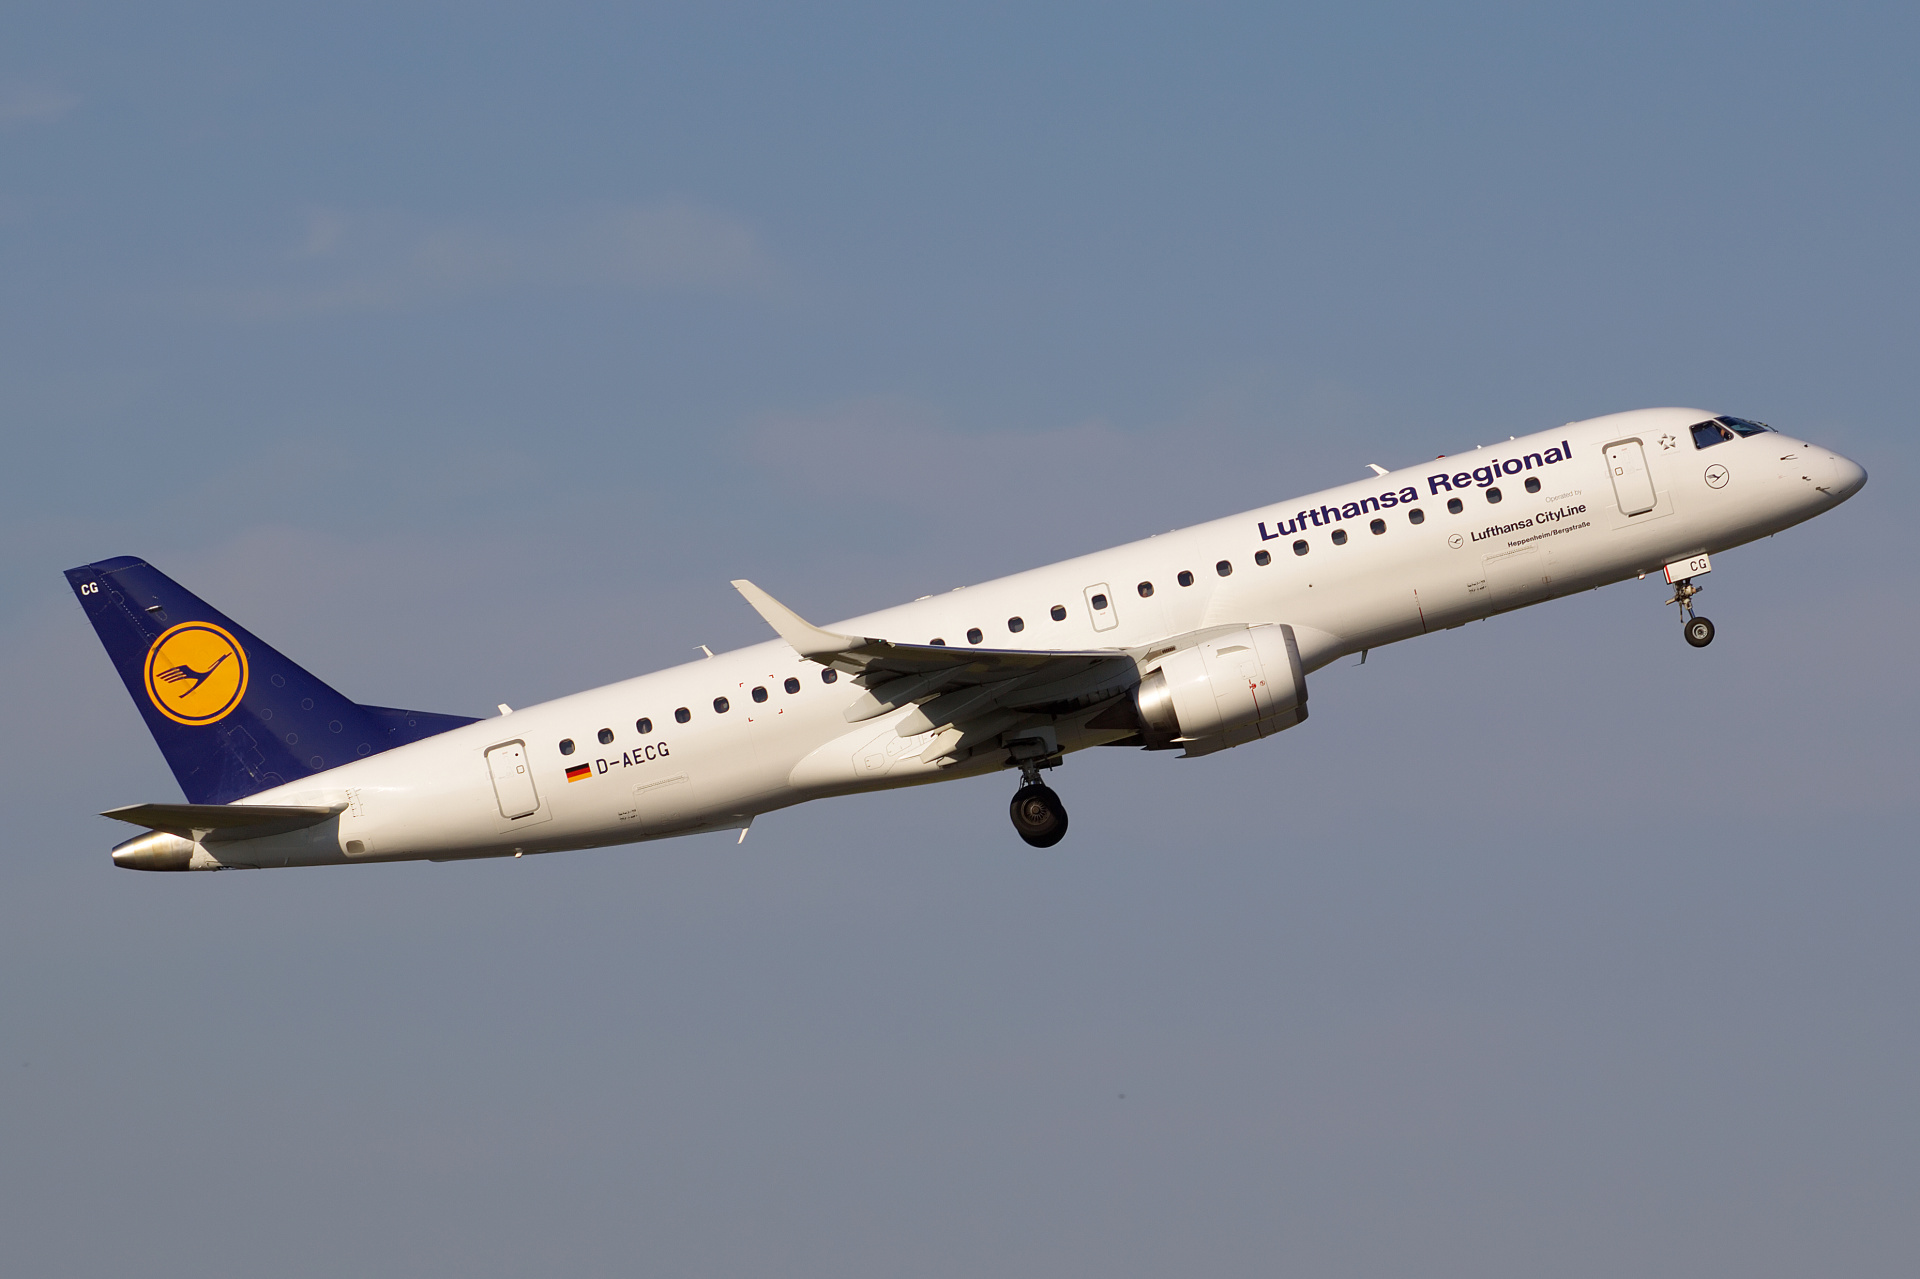 D-AECG, Lufthansa Regional (Lufthansa CityLine) (Aircraft » EPWA Spotting » Embraer E190)